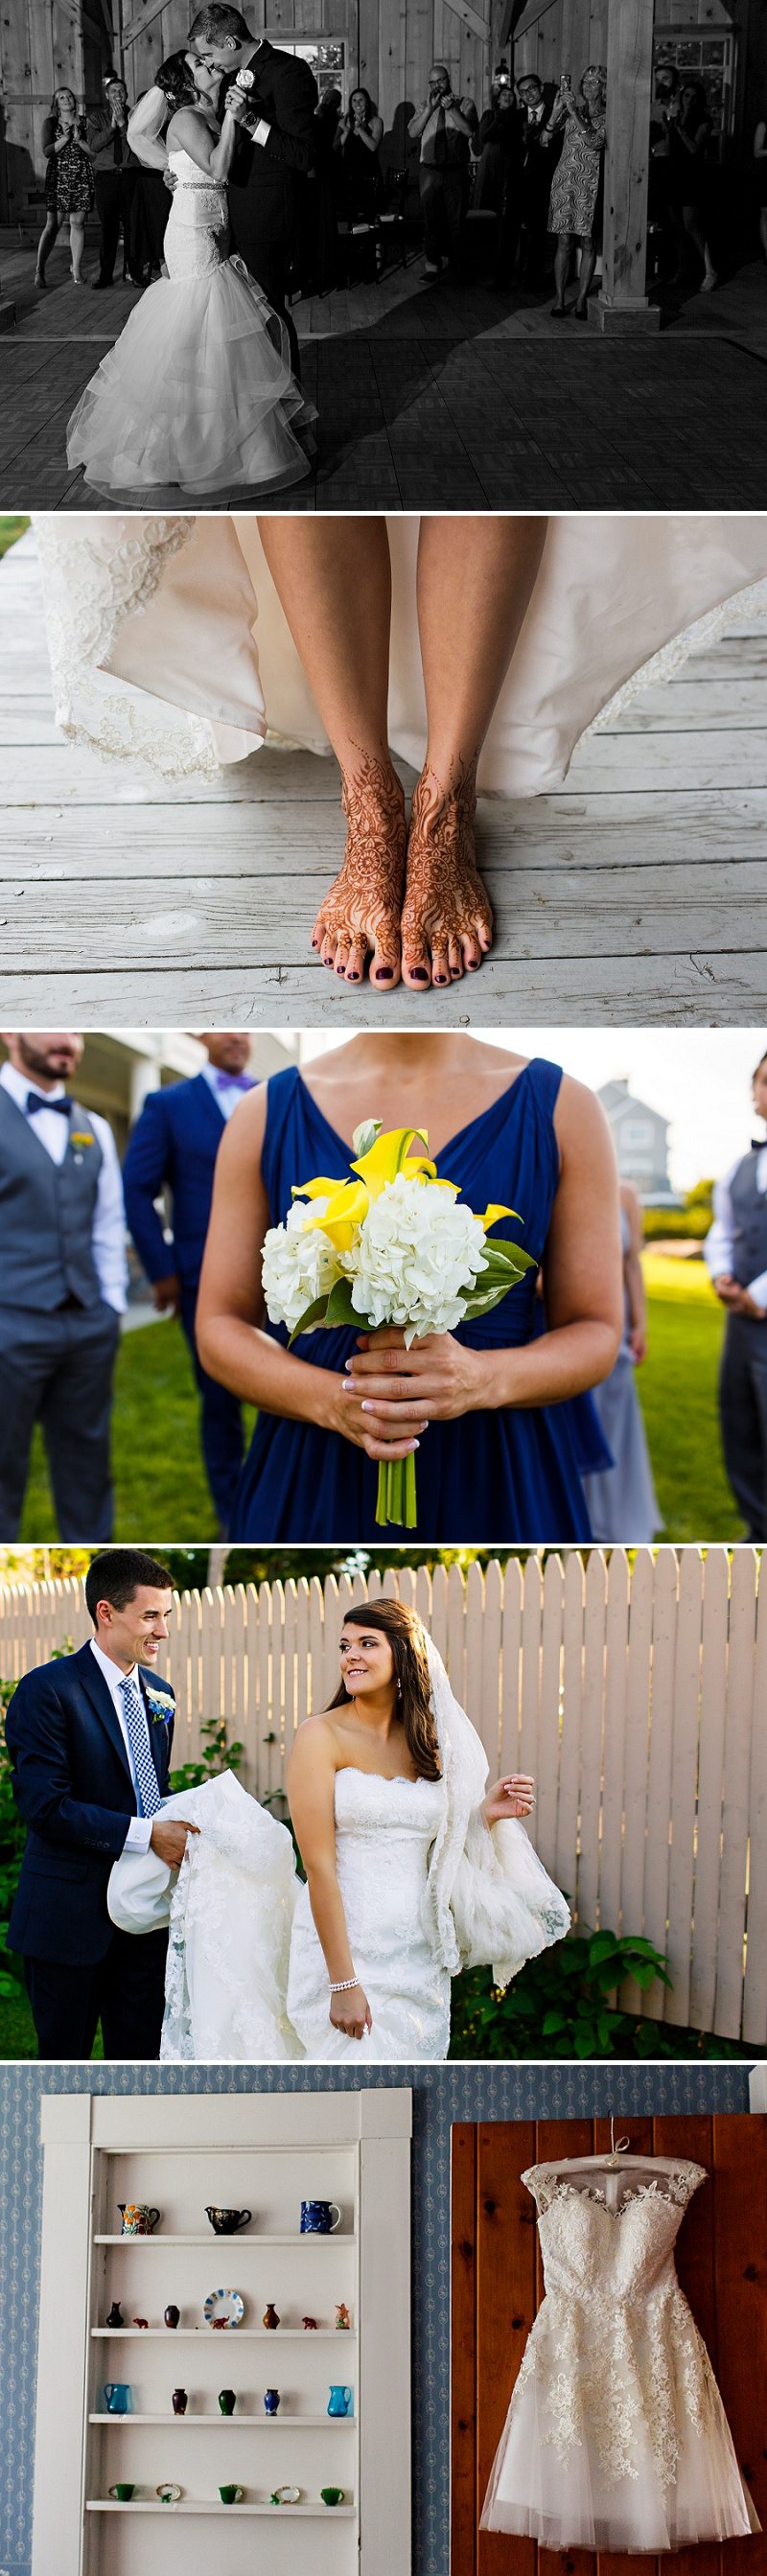 Best-wedding-photos-of-2015-0012